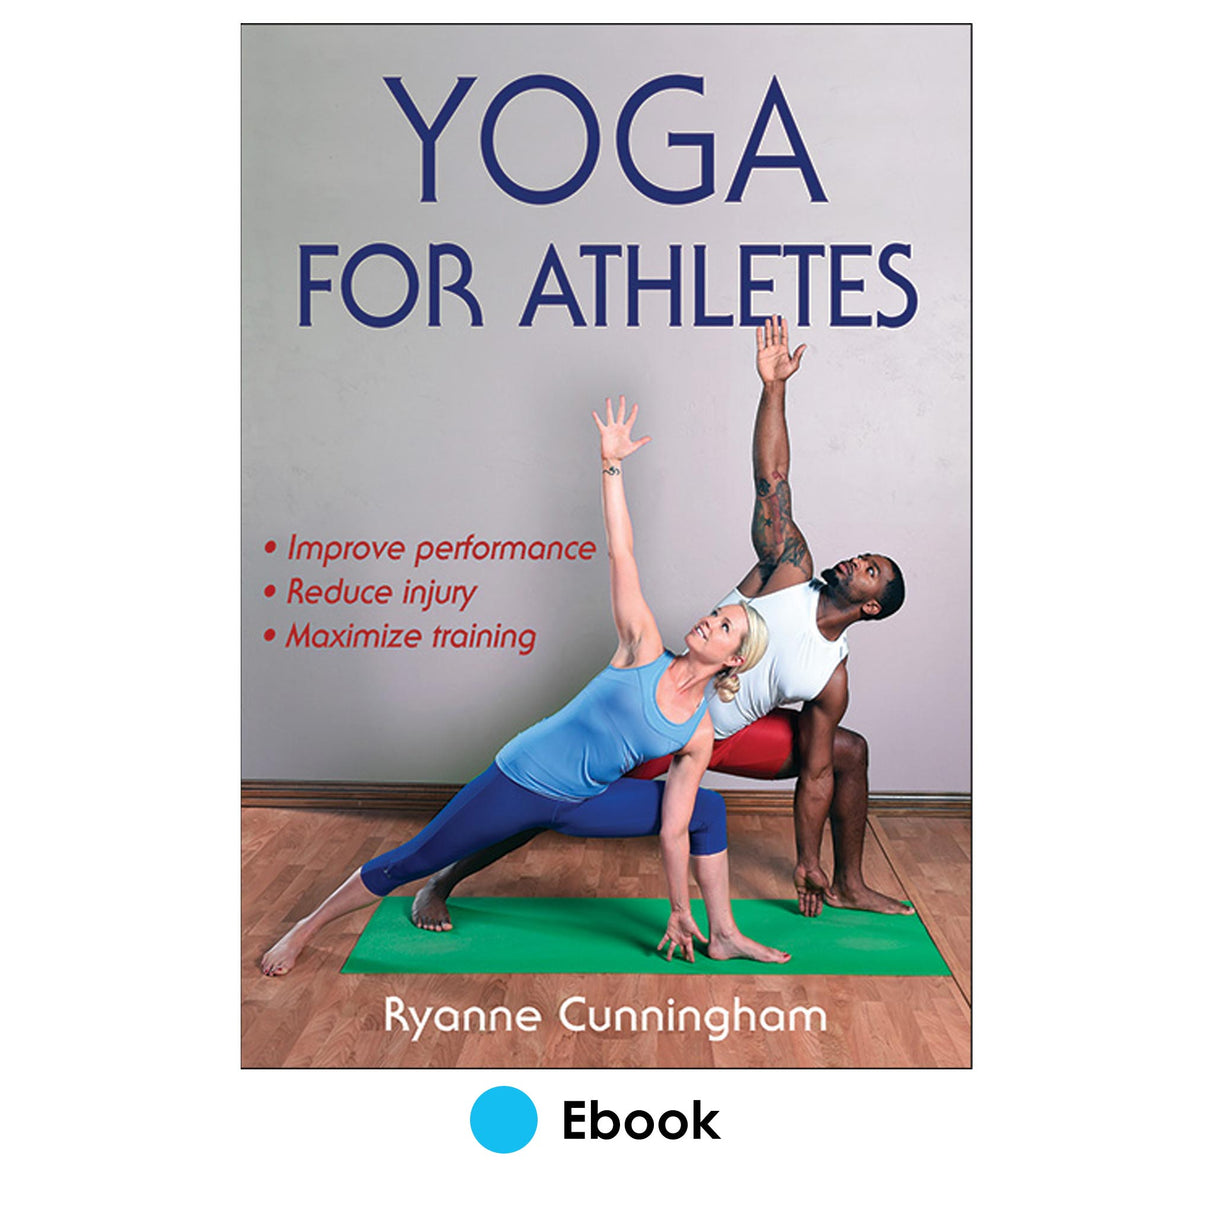 Yoga for Athletes PDF